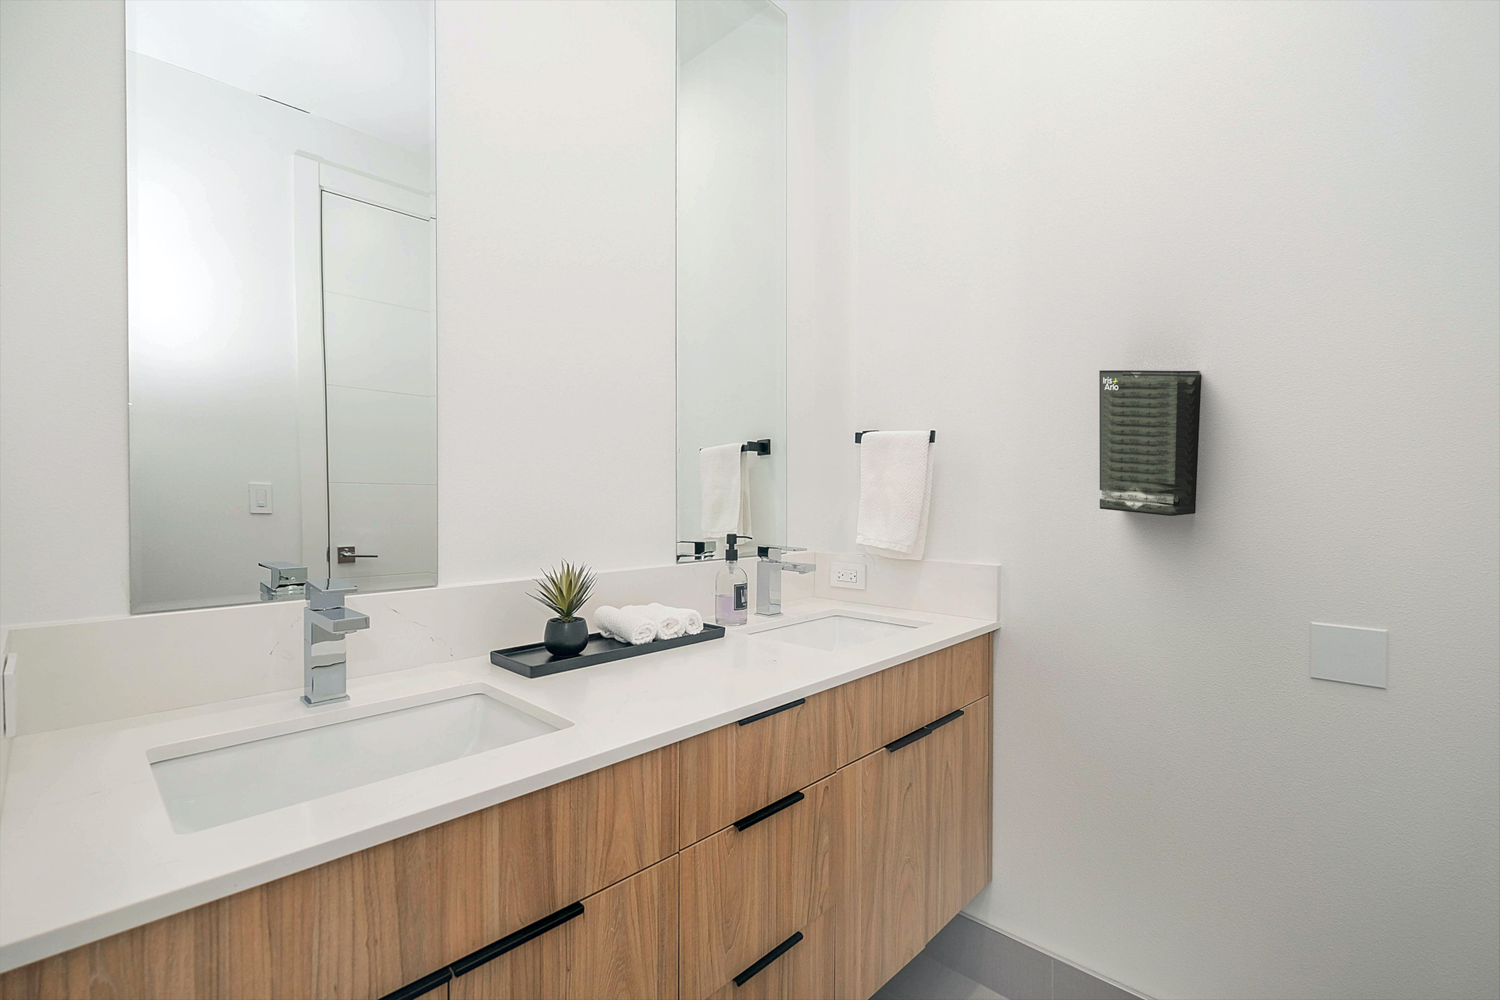 Iris + Arlo Iris + Arlo Recycled Plexiglass Wall-Mounted Dispenser - Applicator Tampons in a corporate bathroom